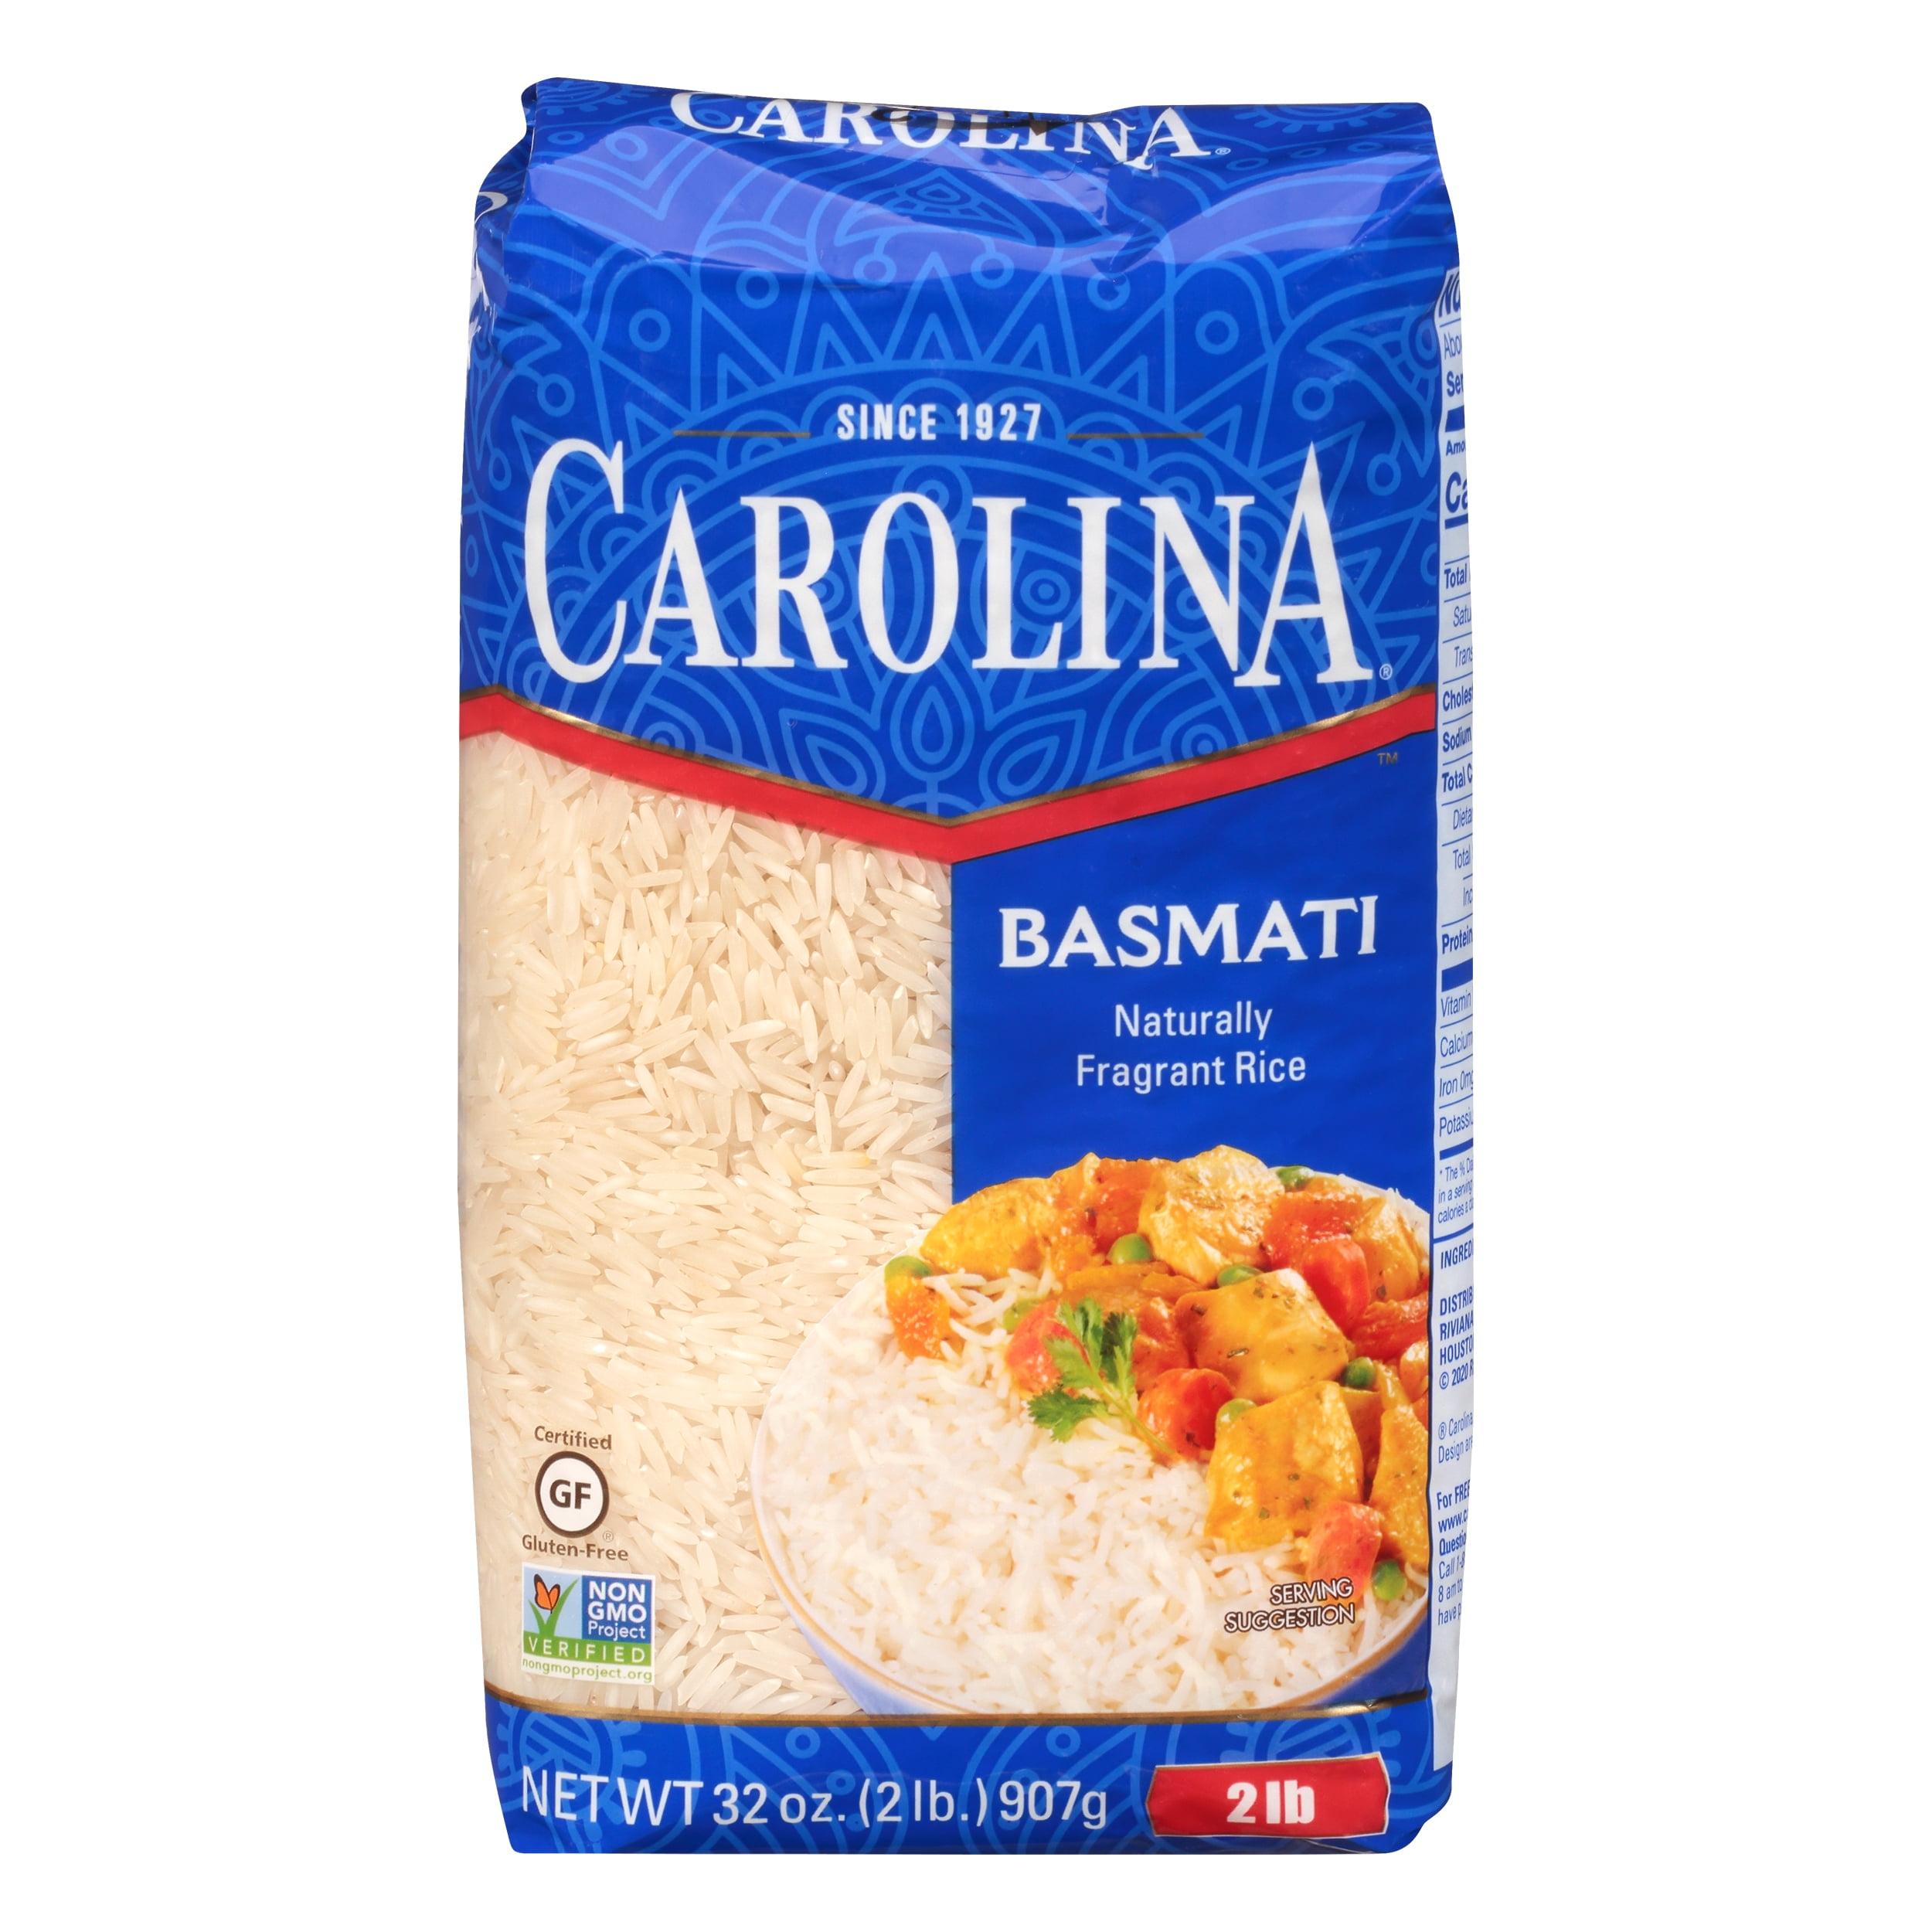 Carolina Basmati Rice, Naturally Fragrant Long Grain Rice, 2 lb Bag